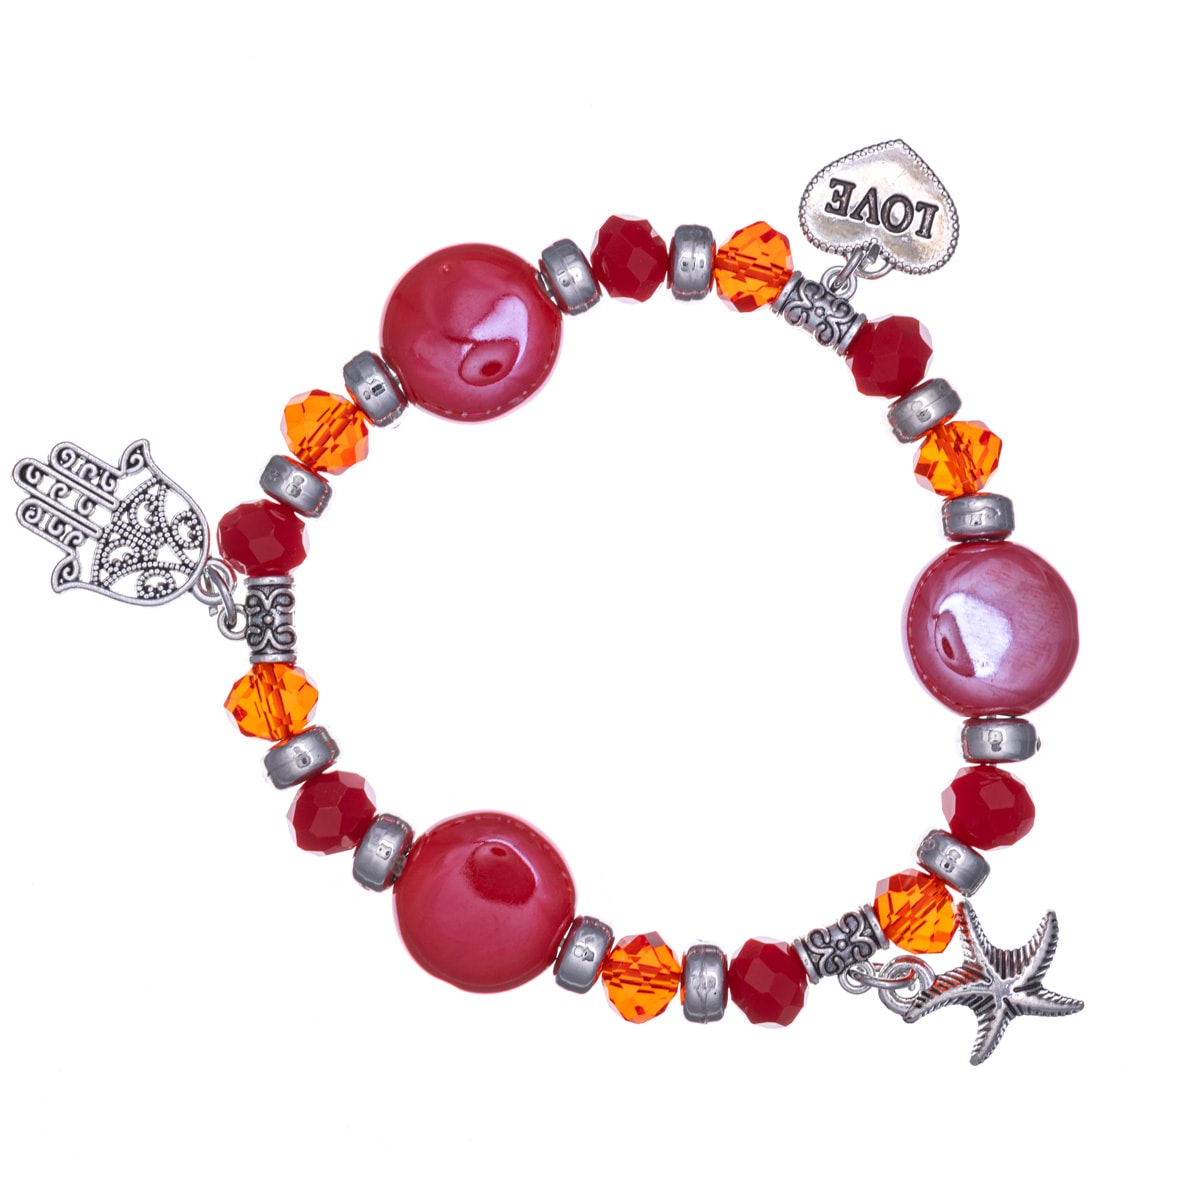 Flexible colourful beaded bracelet with pendants